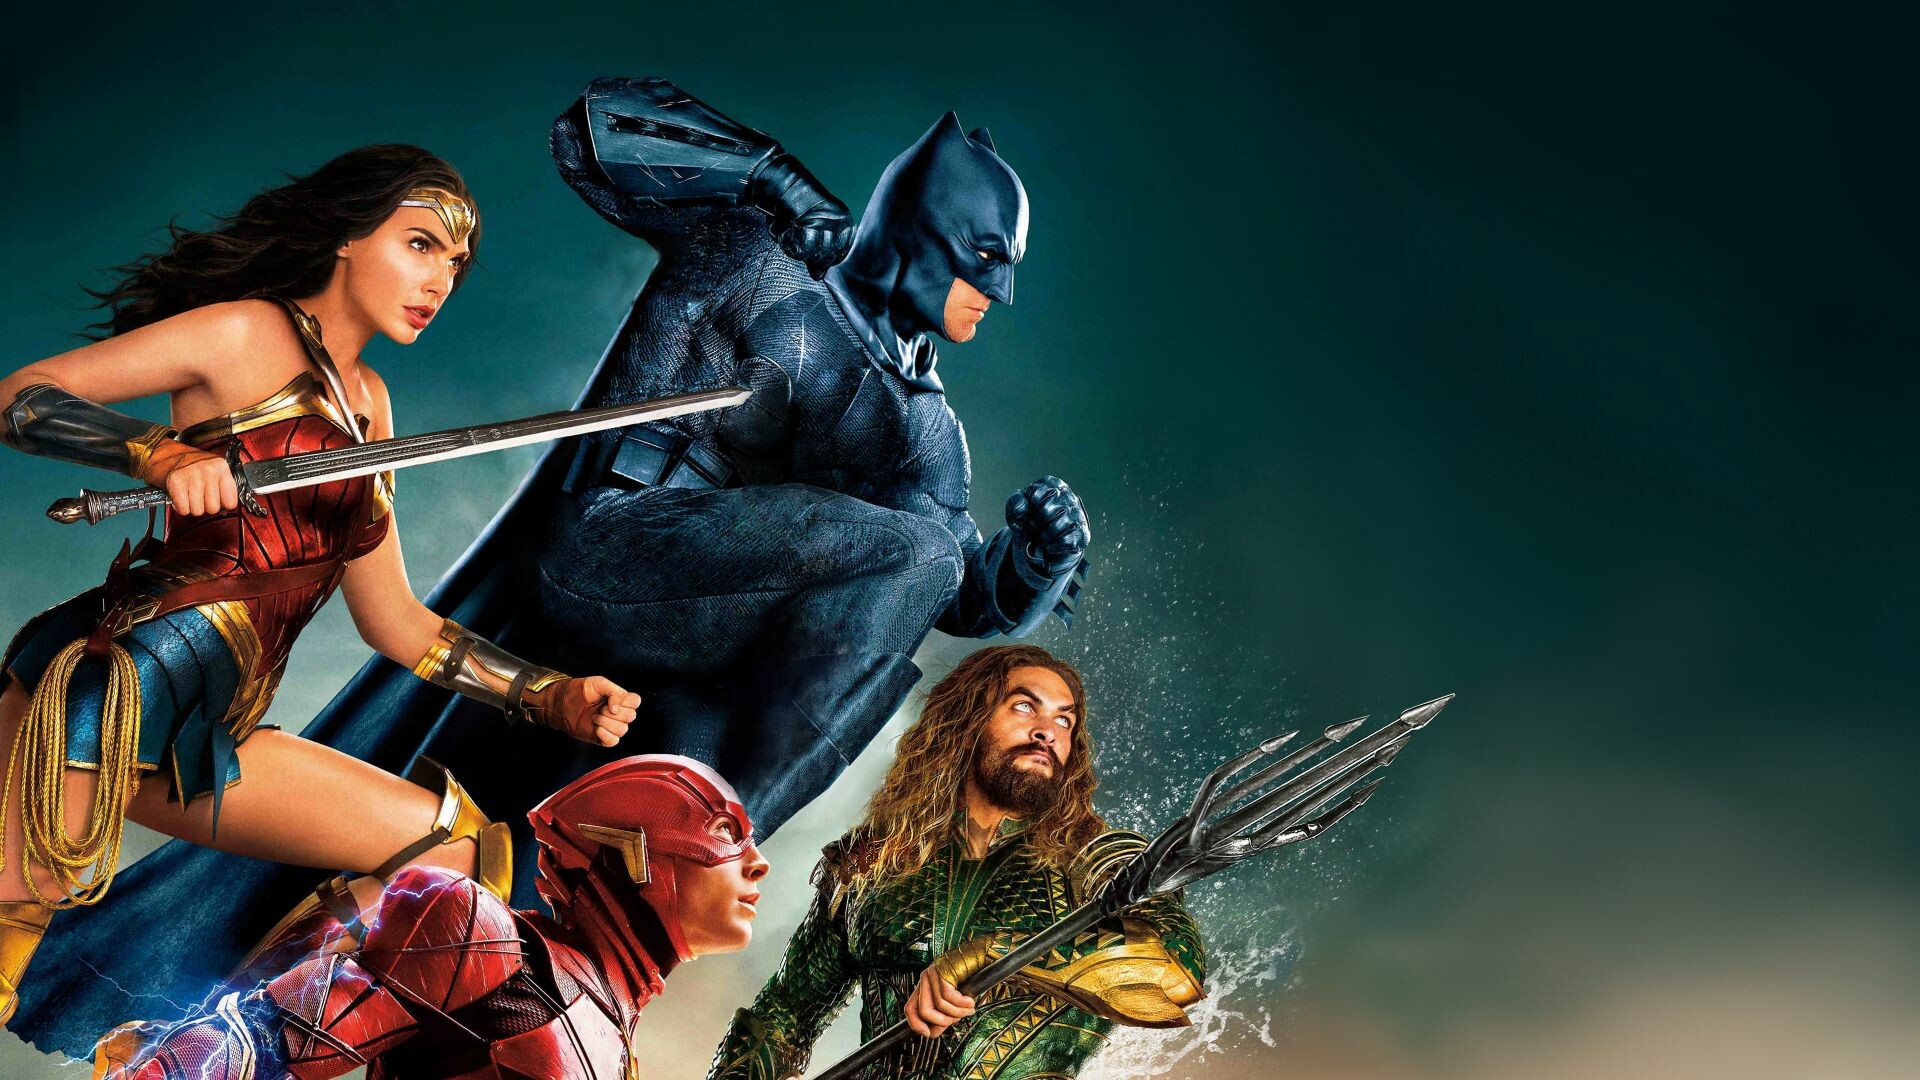 DC Heroes: Justice League, Jason Momoa as Aquaman, Ezra Miller as The Flash, Ben Affleck as Batman. 1920x1080 Full HD Background.